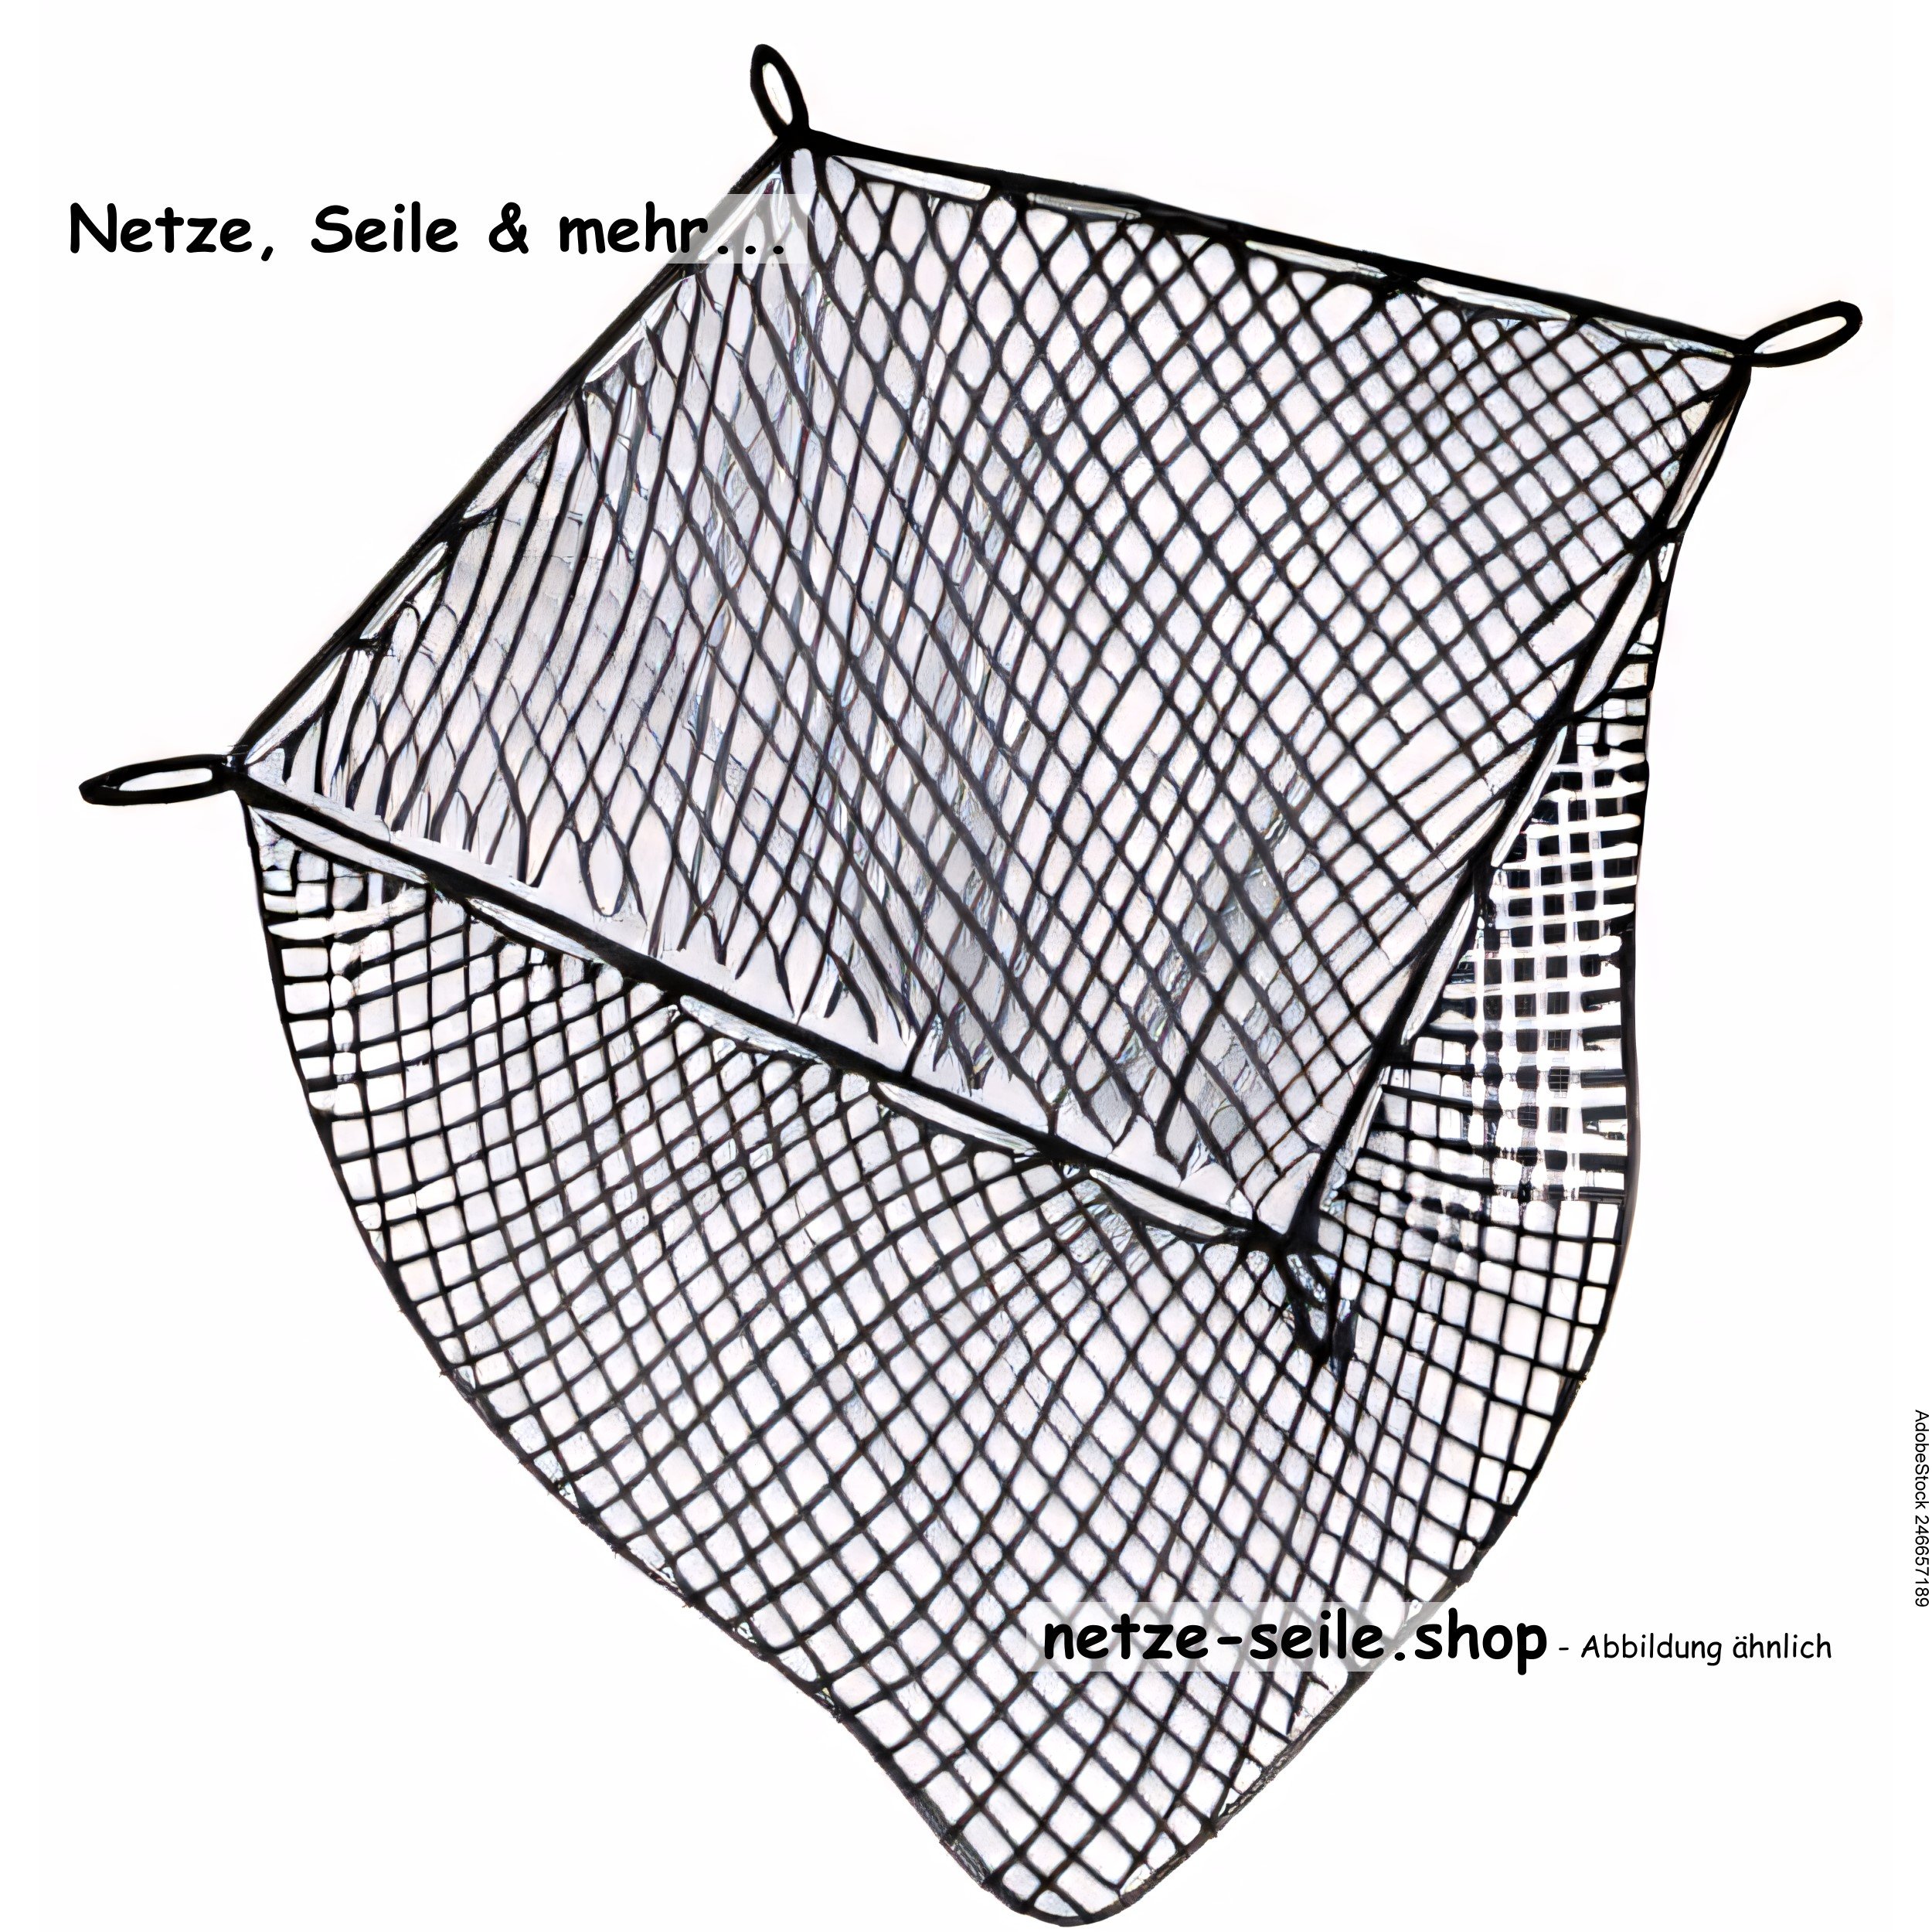 Hanging net 100mm x 150mm side length, approx. 80mm depth